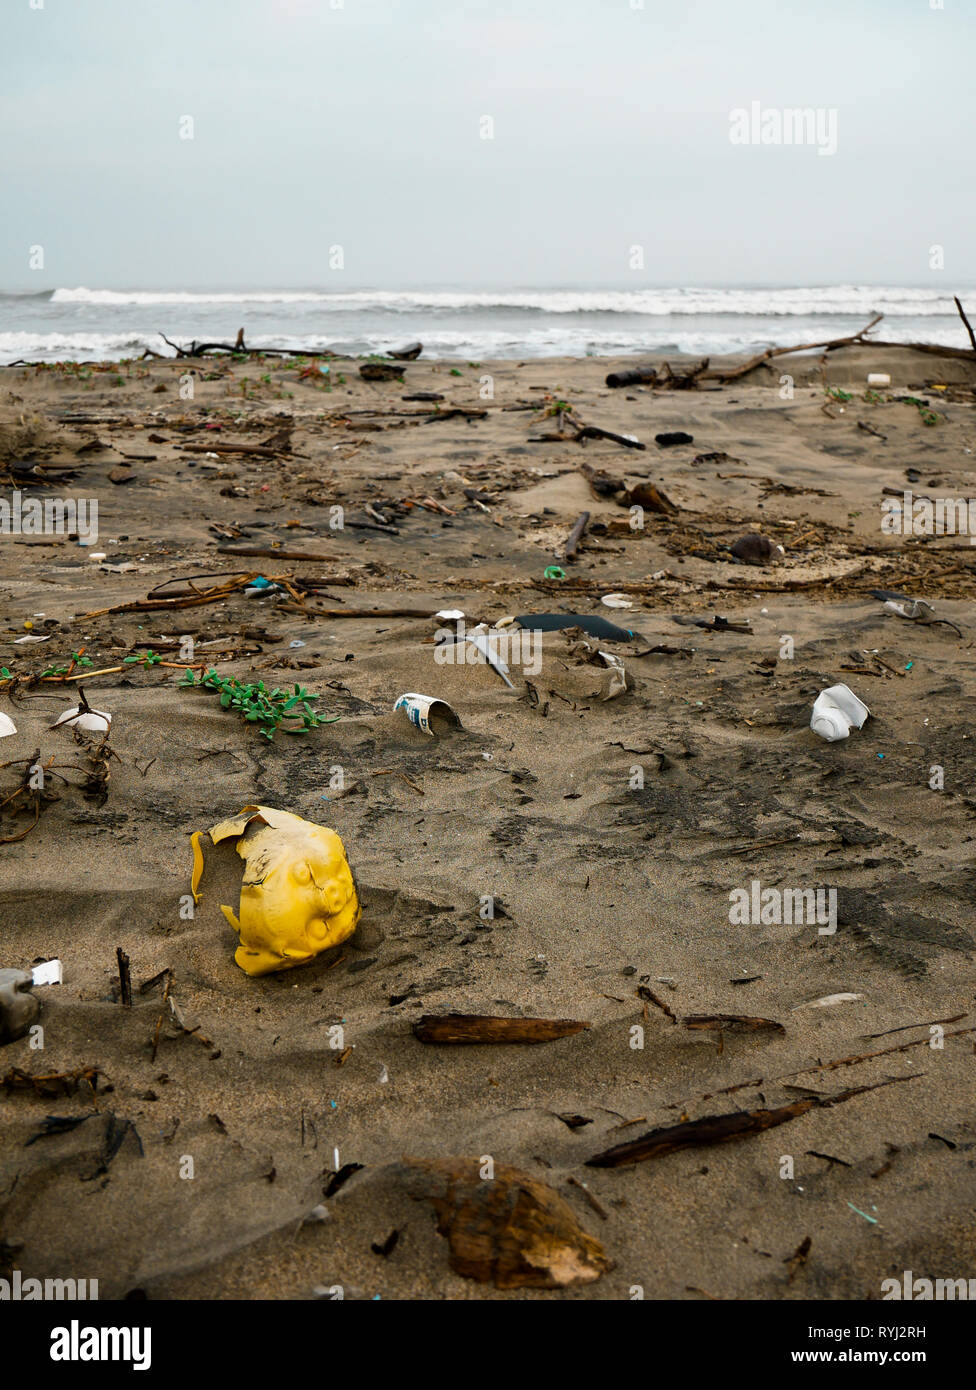 a broken yellow plastic piggy bank trash on a beach in the caribbean ocean near Cartagena colombia Stock Photo